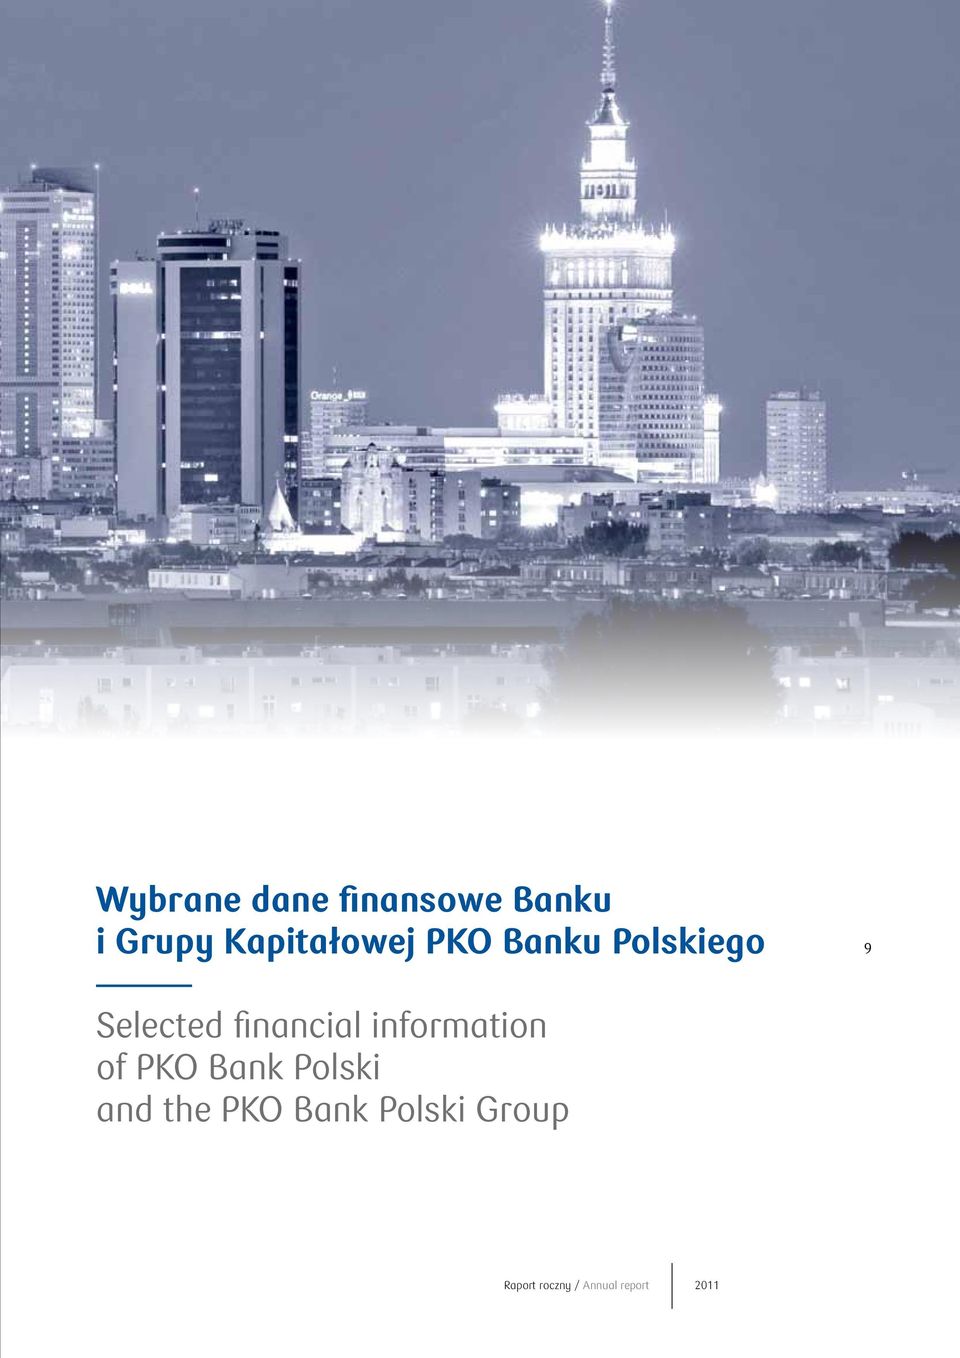 financial information of PKO Bank Polski and